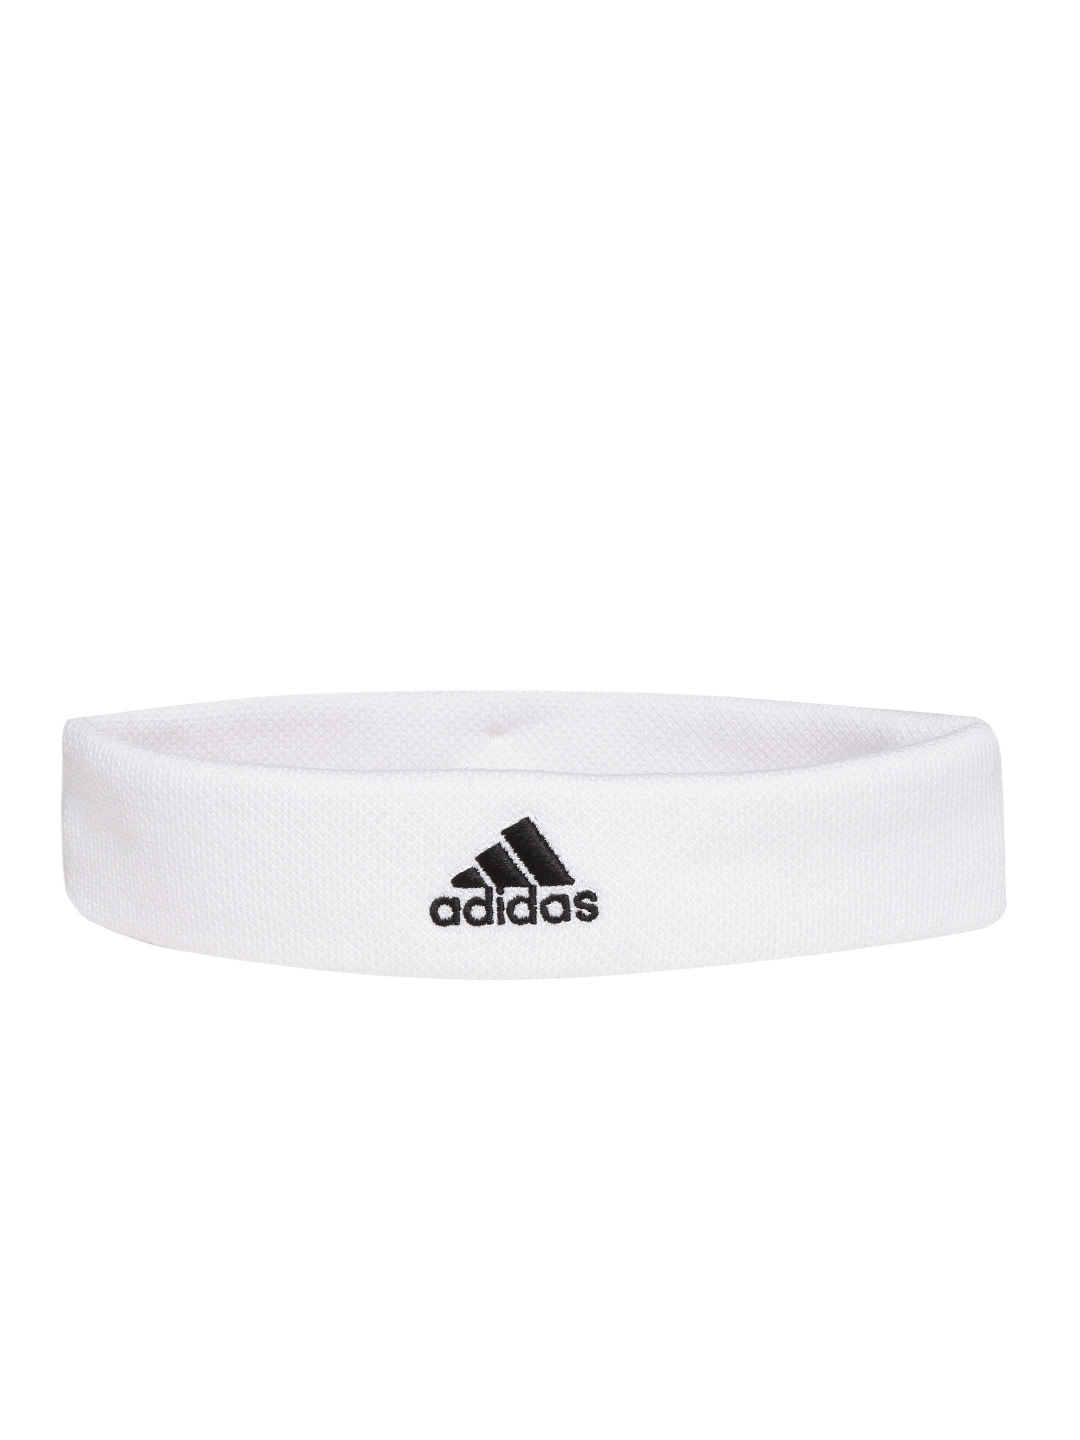 Adidas Unisex Tennis Headband